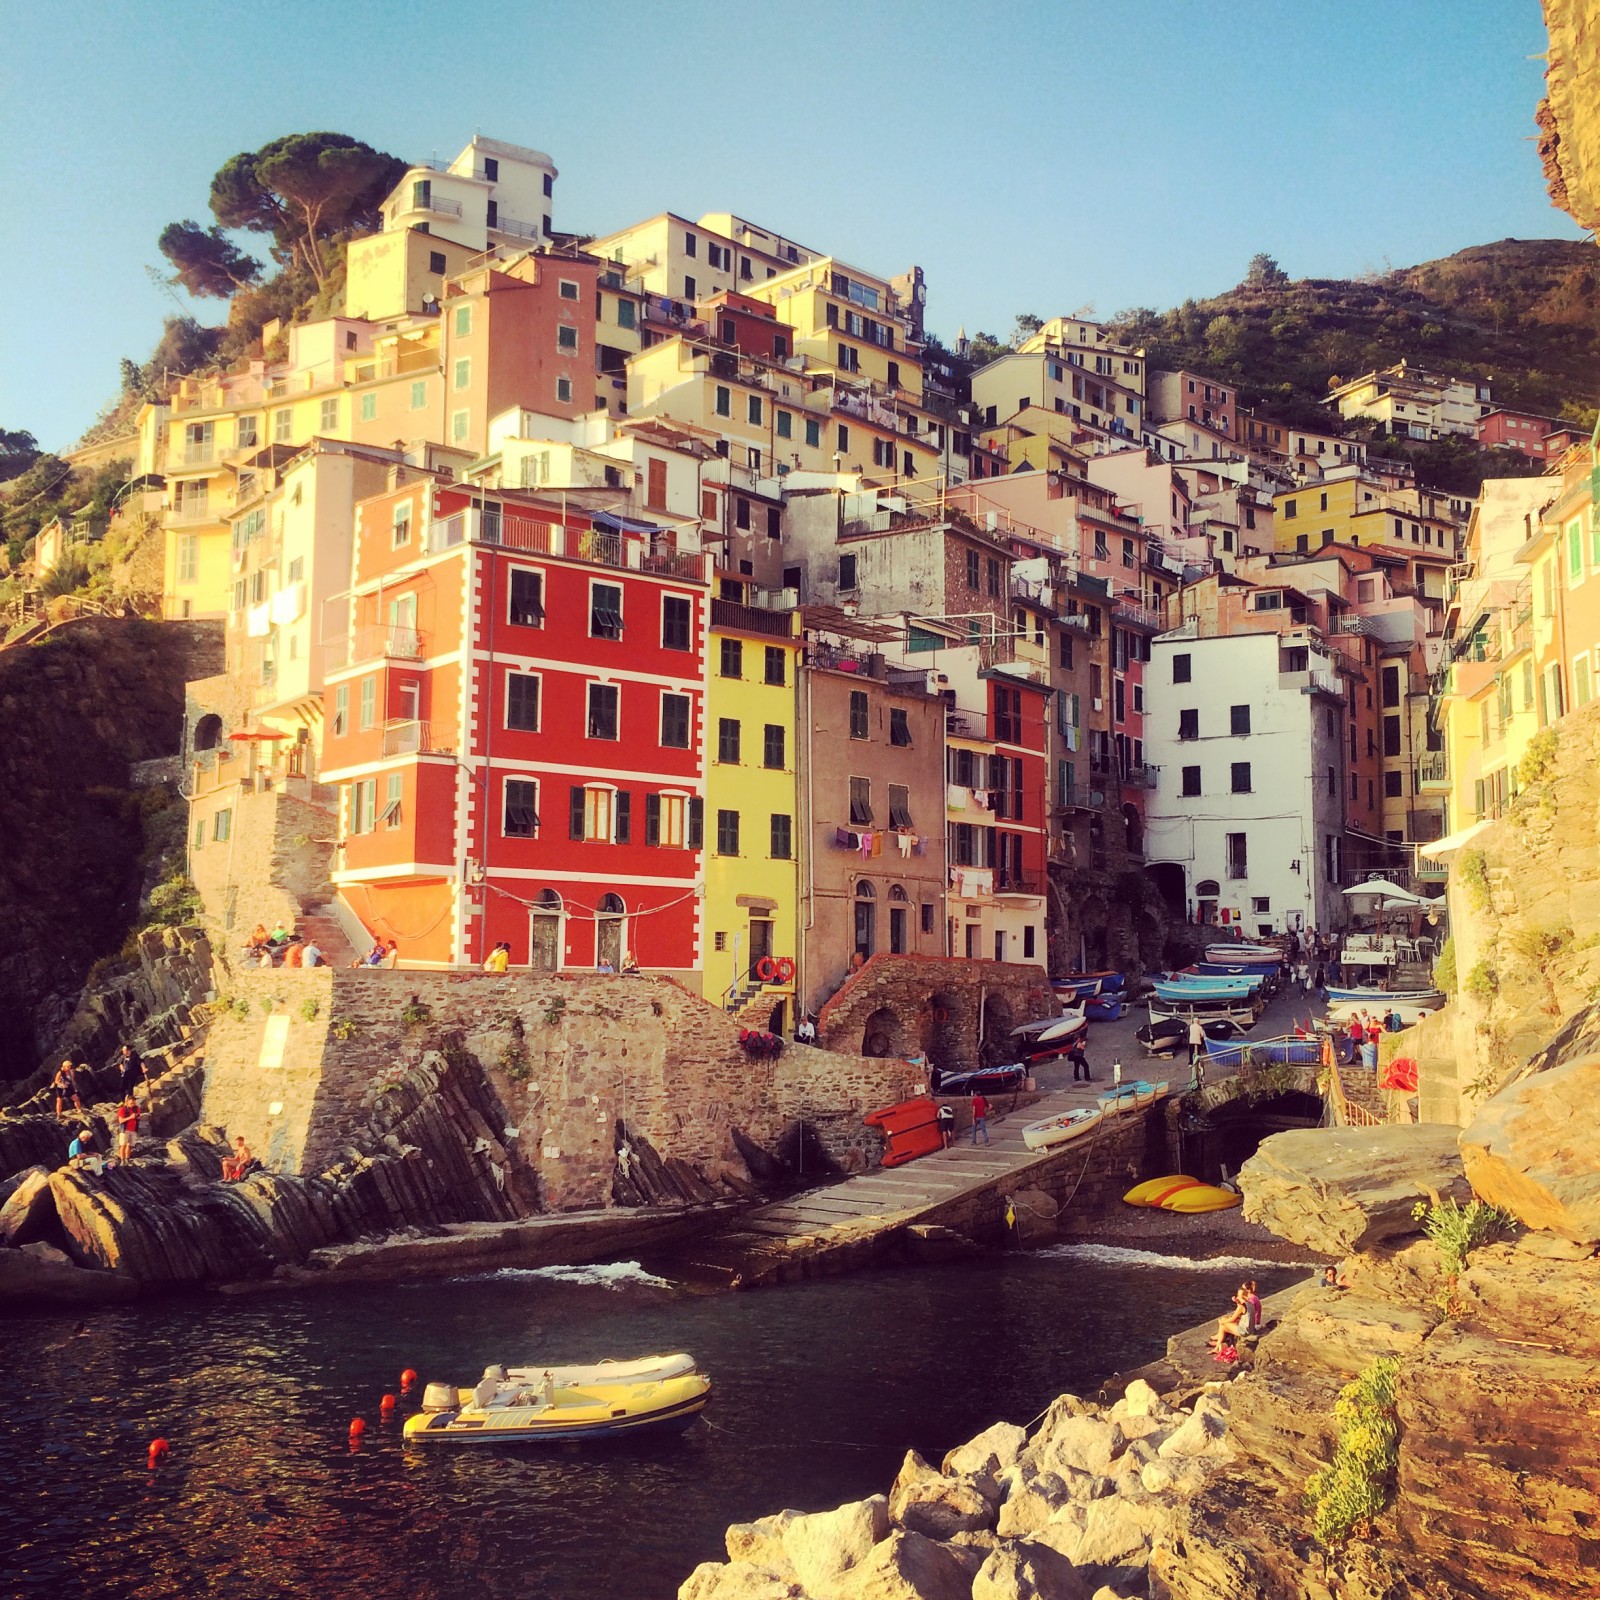 Colours of Cinque Terre